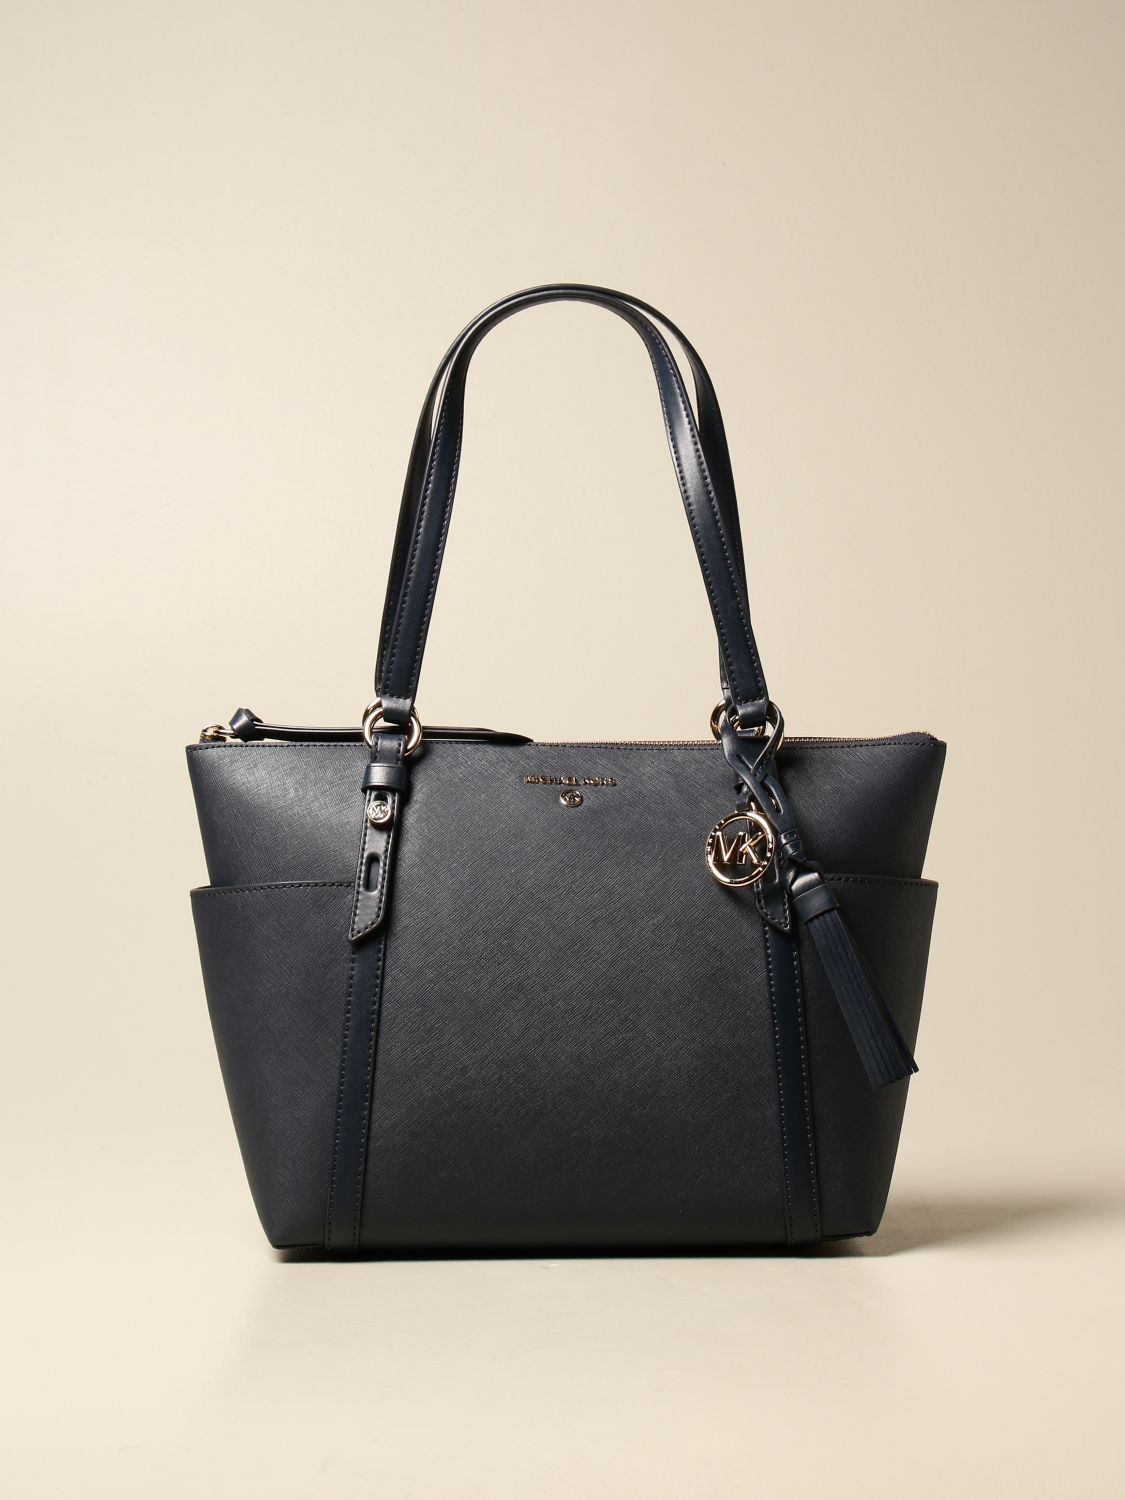  Michael Kors - Blues / Women's Tote Handbags / Women's